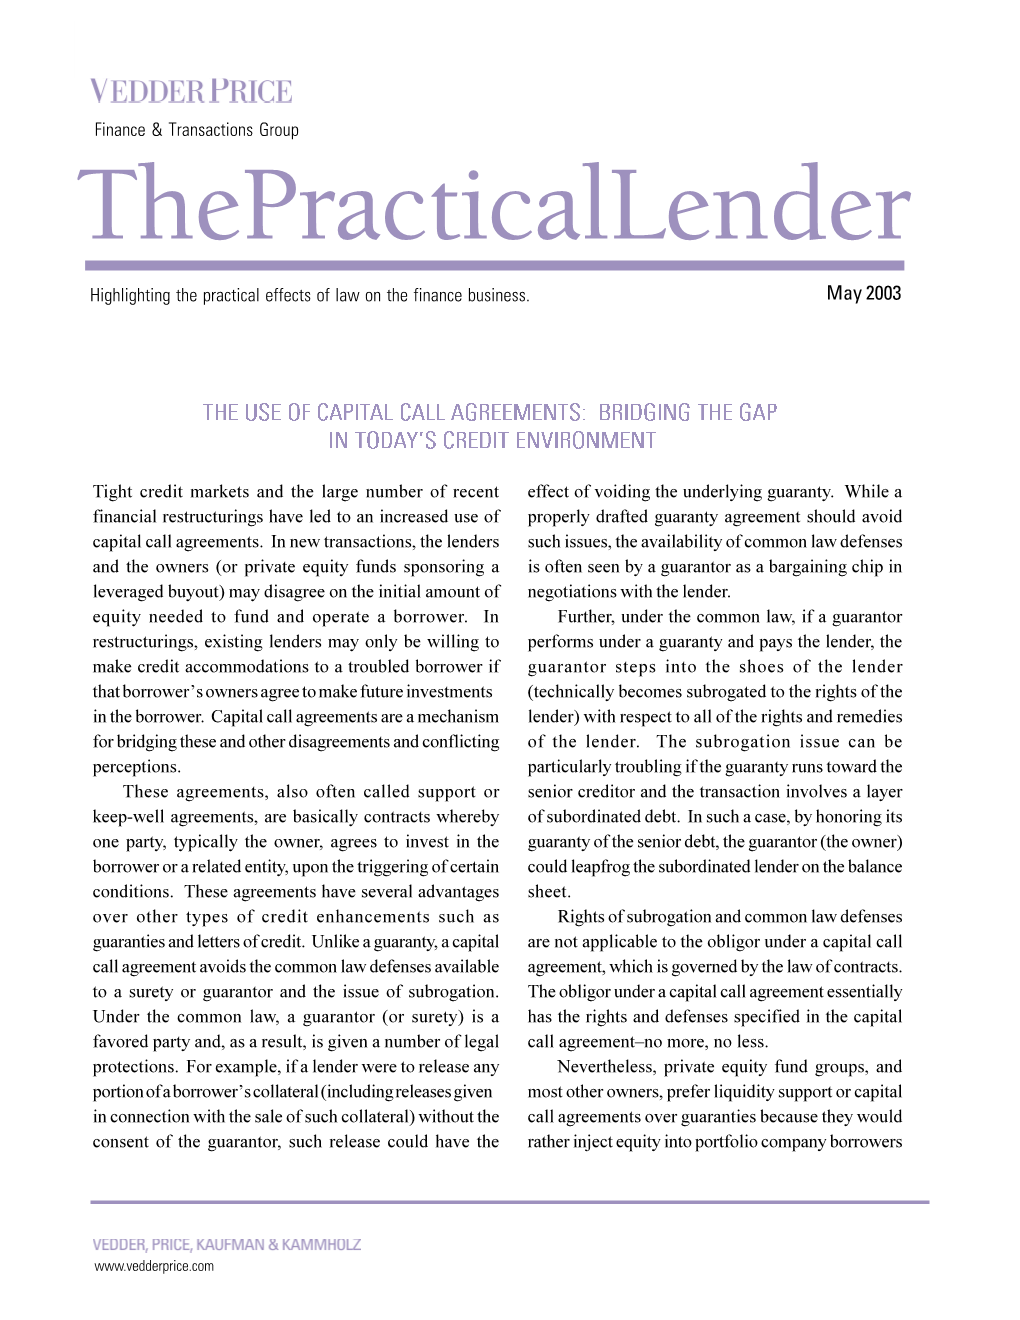 Thepracticallender Finance & Transactions Group